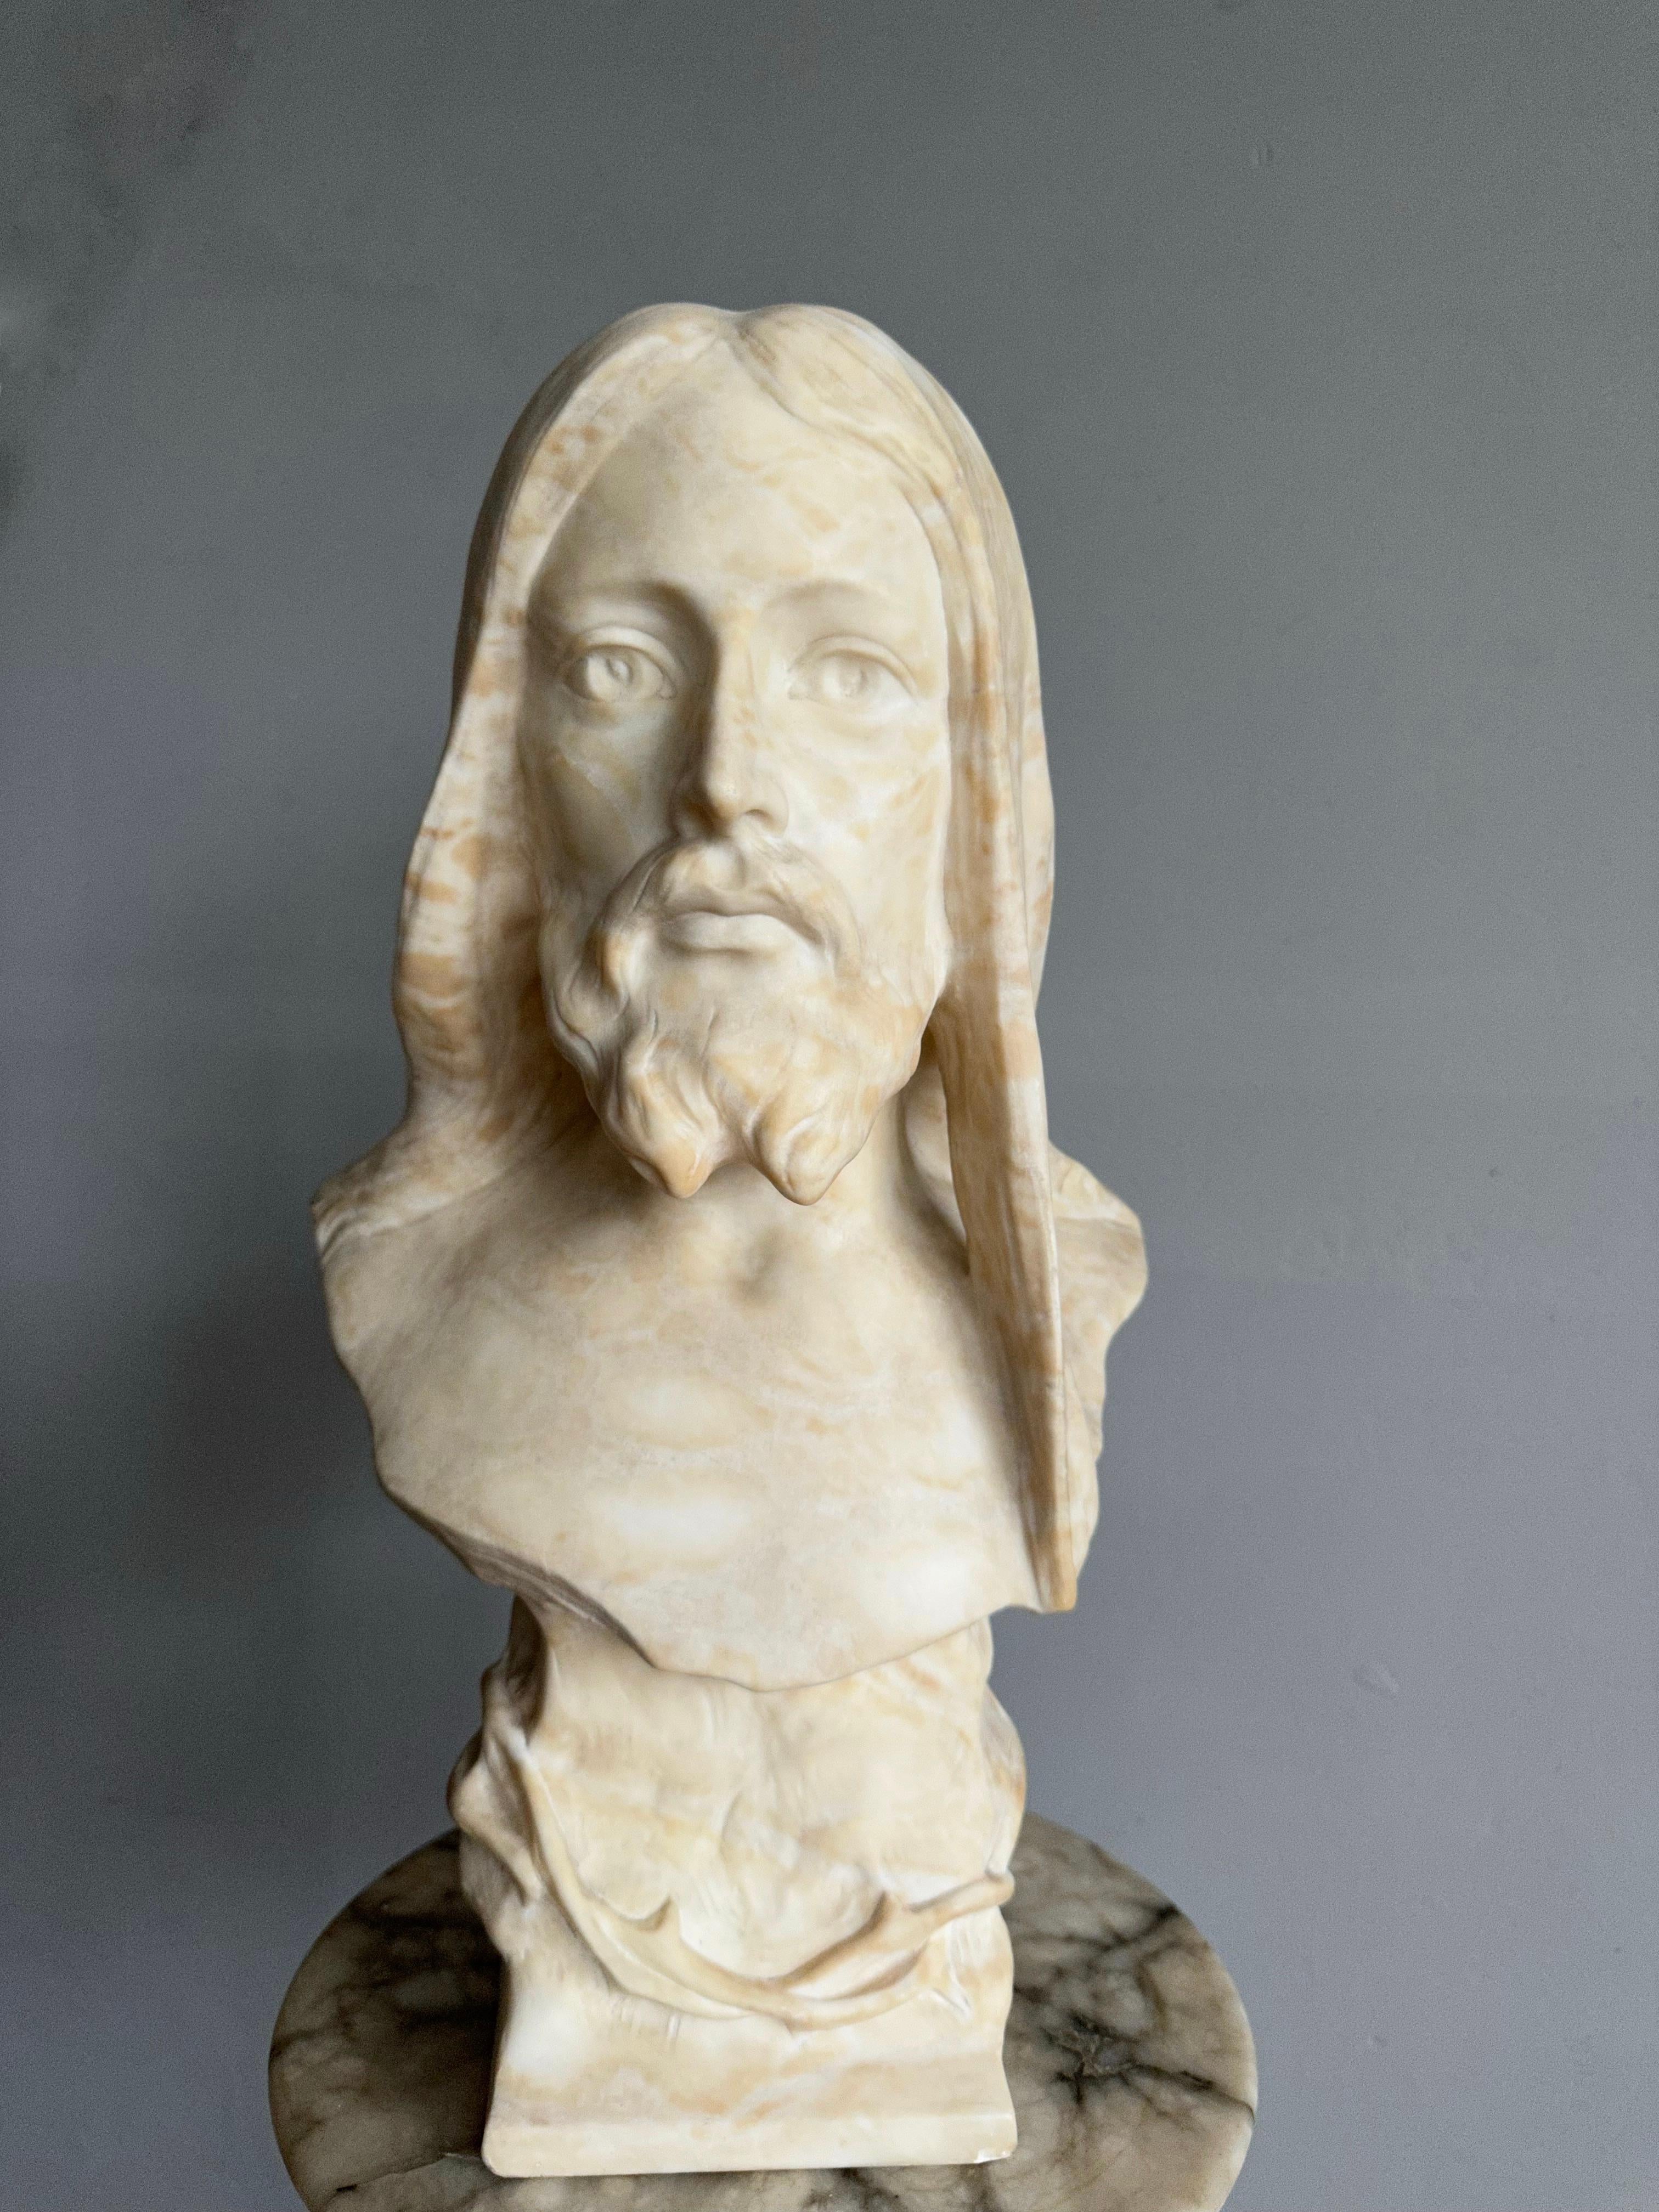 Antique, Early 1900 Large Hand Carved Alabaster Sculpture / Bust of Jesus Christ For Sale 13